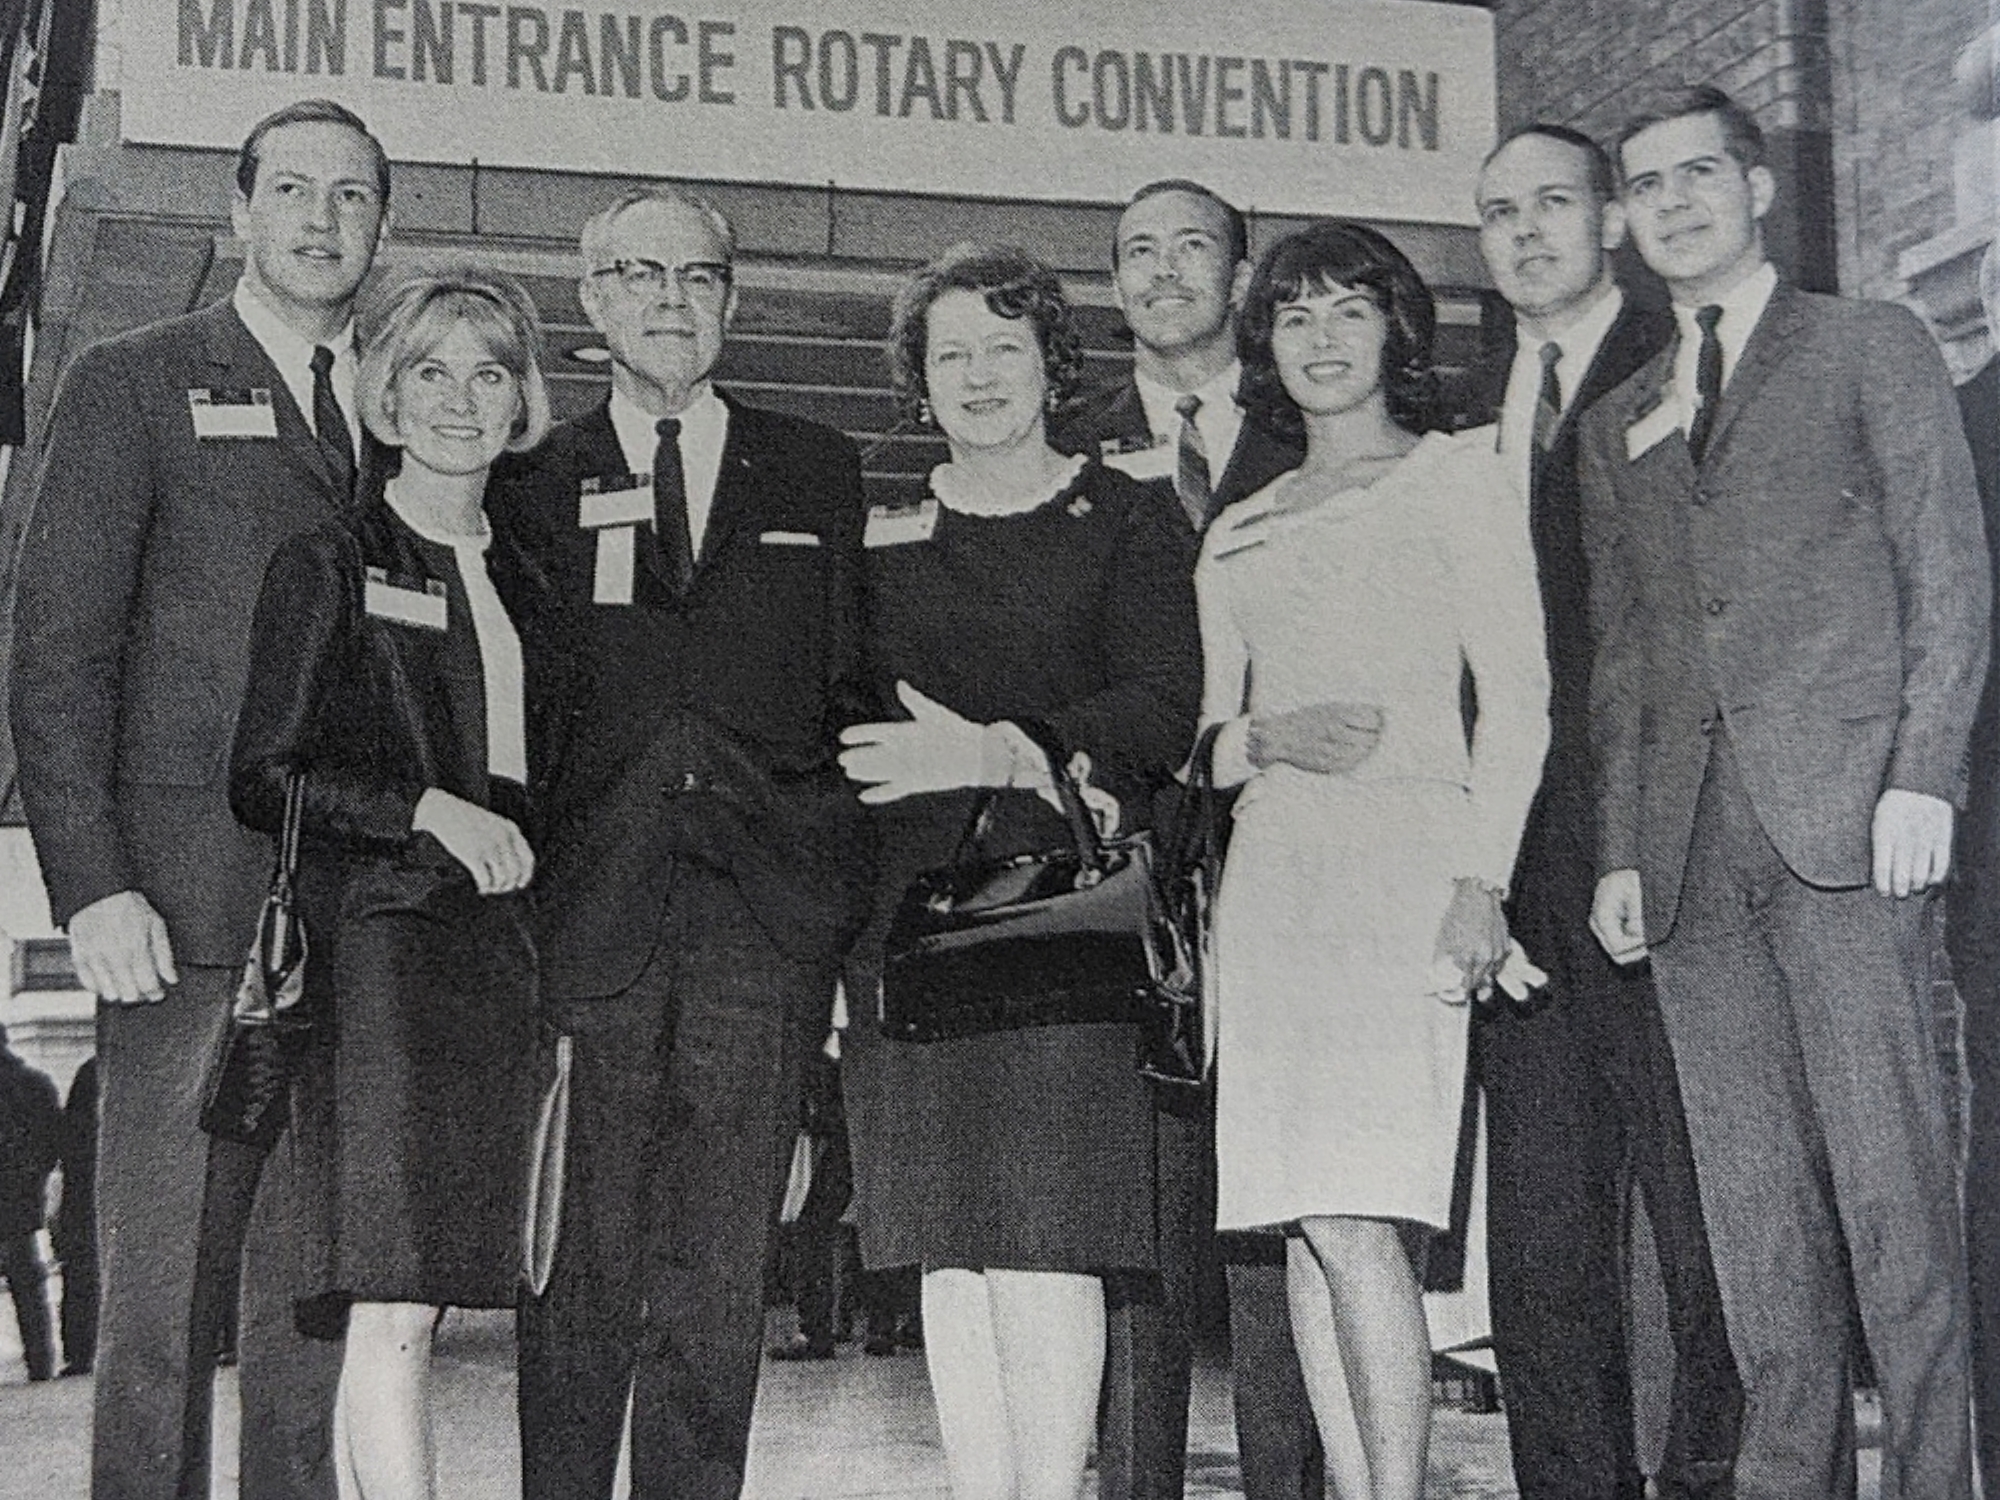 Richard L Evans with Rotary International